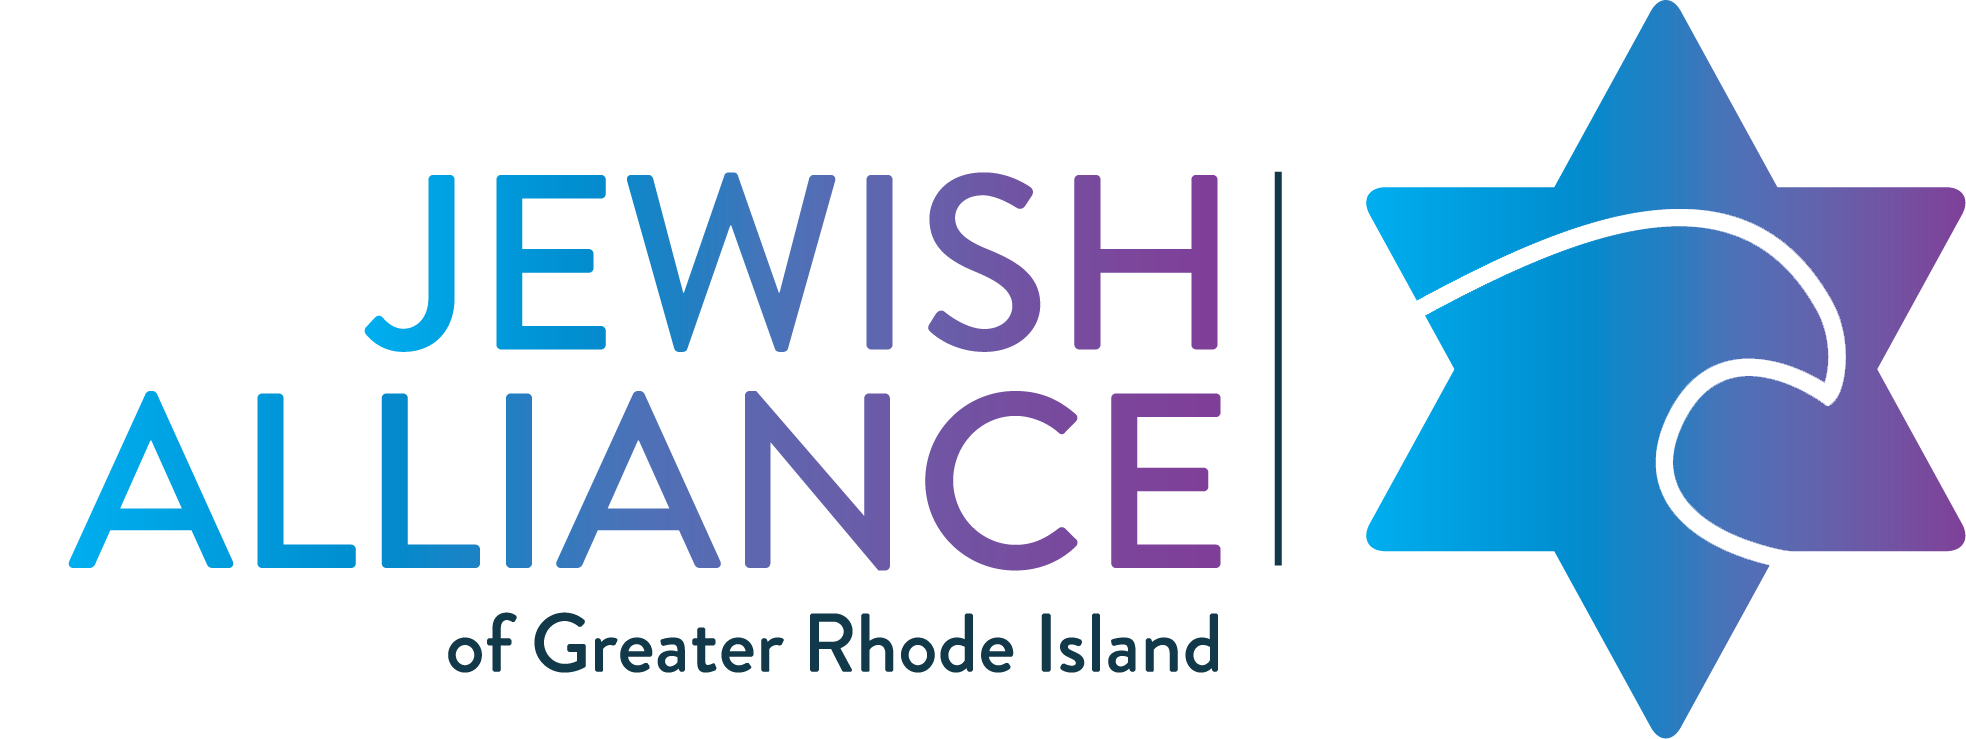 Jewish Alliance logo_CMYK.png